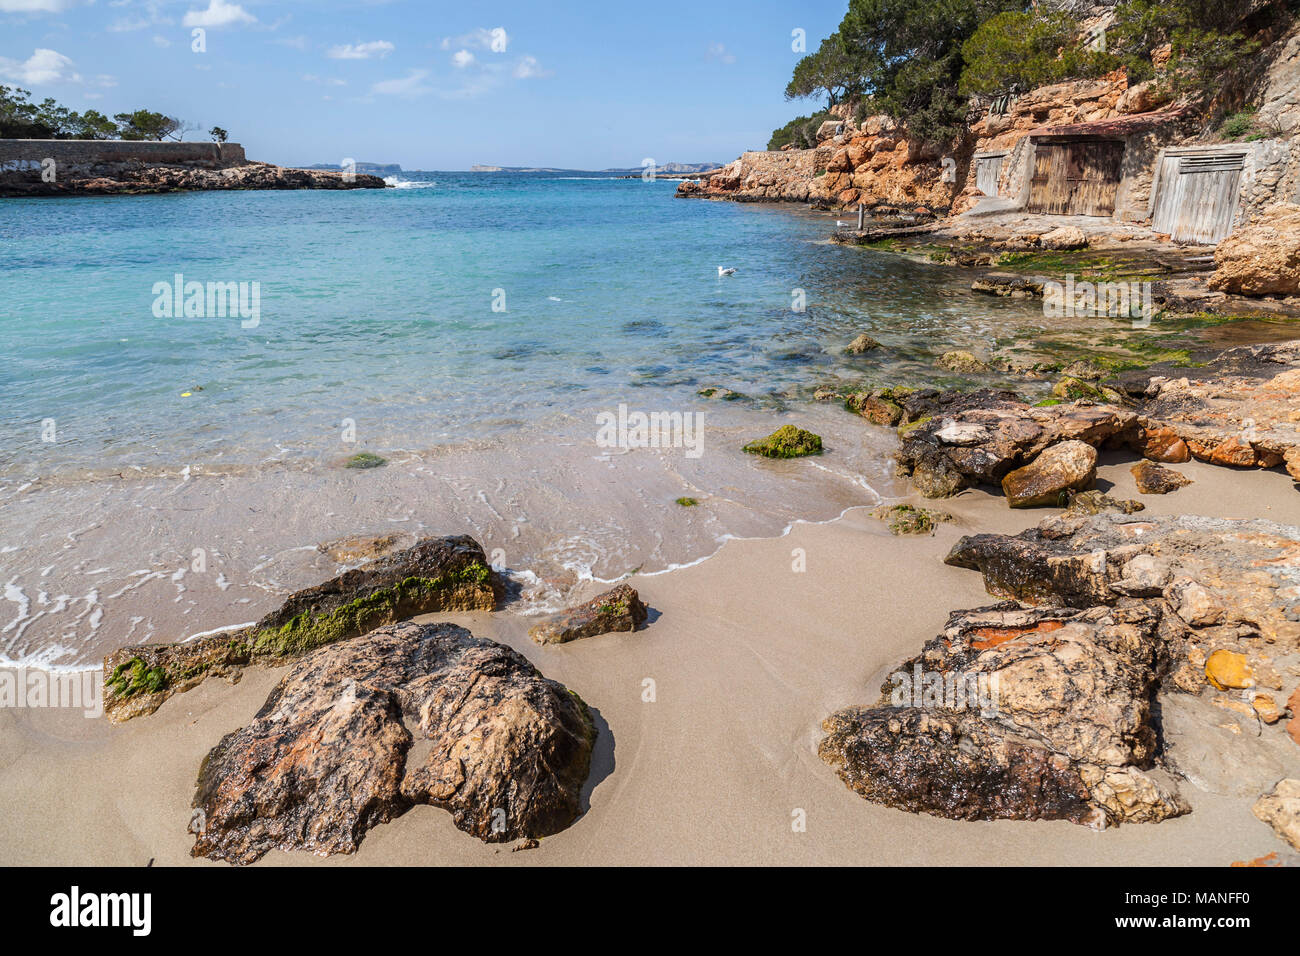 Mediterranean beach, Cala Gracio, town of Sant Antoni, Ibiza island,Spain. Stock Photo